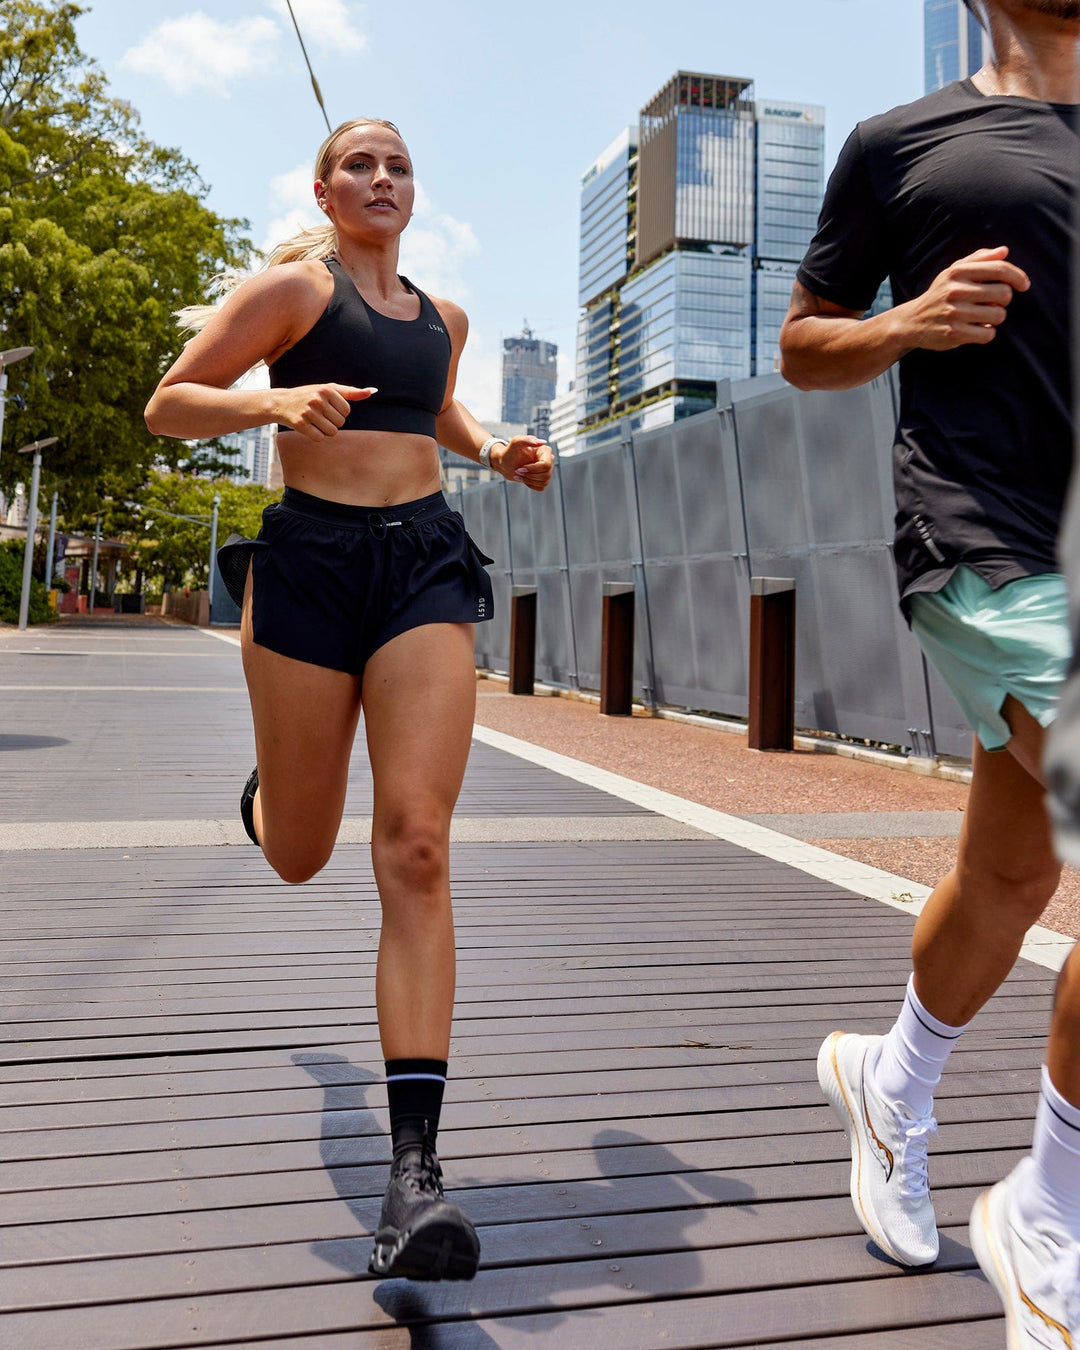 Woman wearing Accelerate Run Shorts - Black